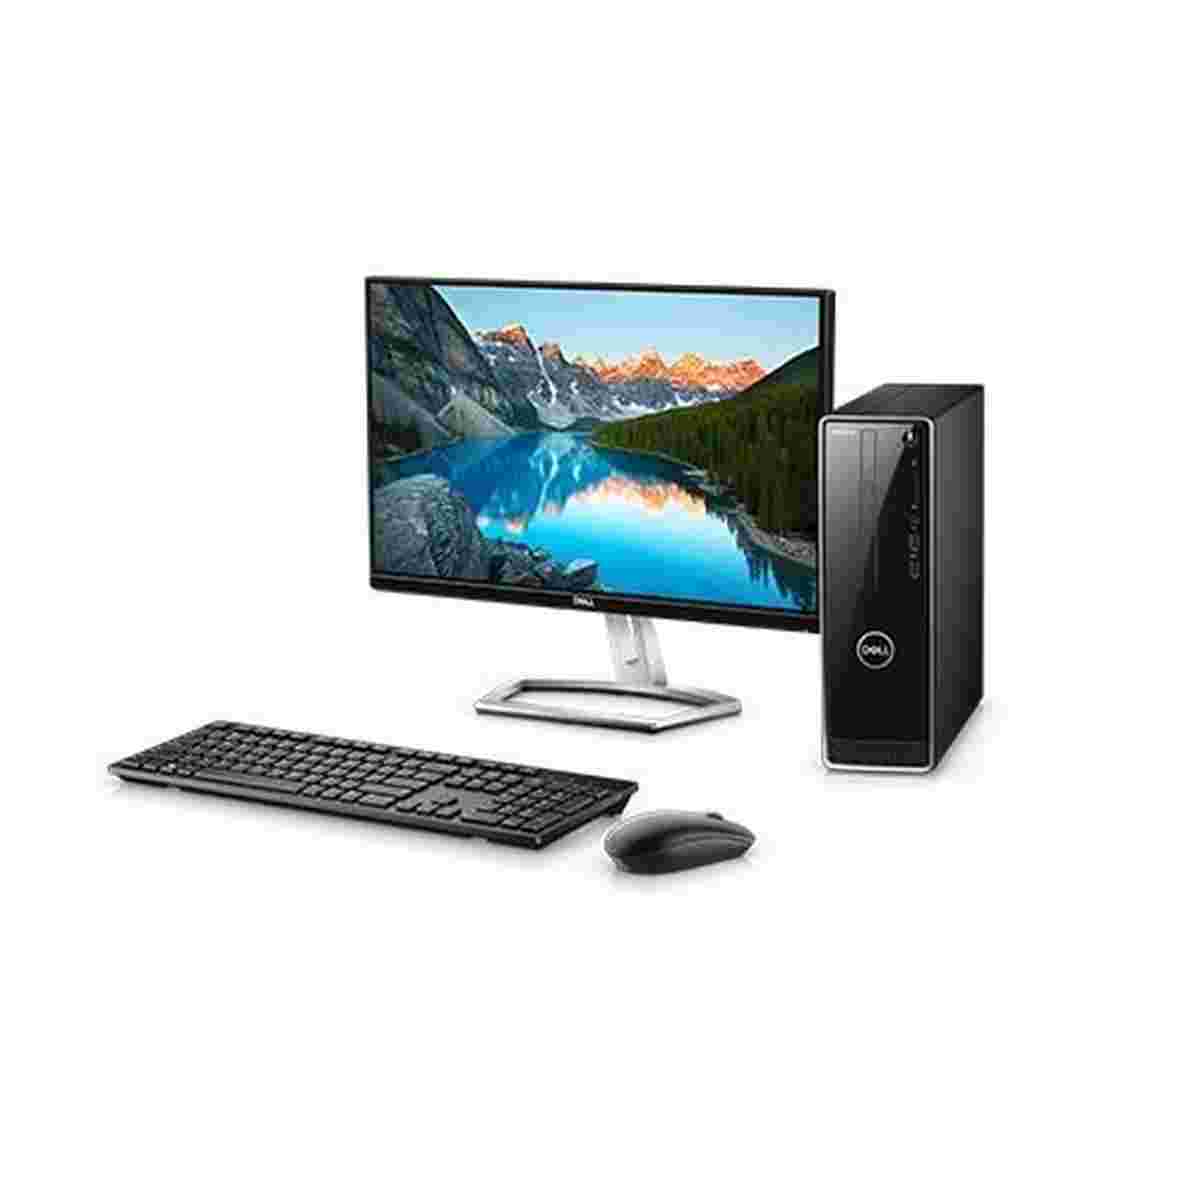 Dell 3470 Win10 | Dell Inspiron 3470 Desktop Price 12 Aug 2022 Dell 3470 Tower Desktop online shop - HelpingIndia